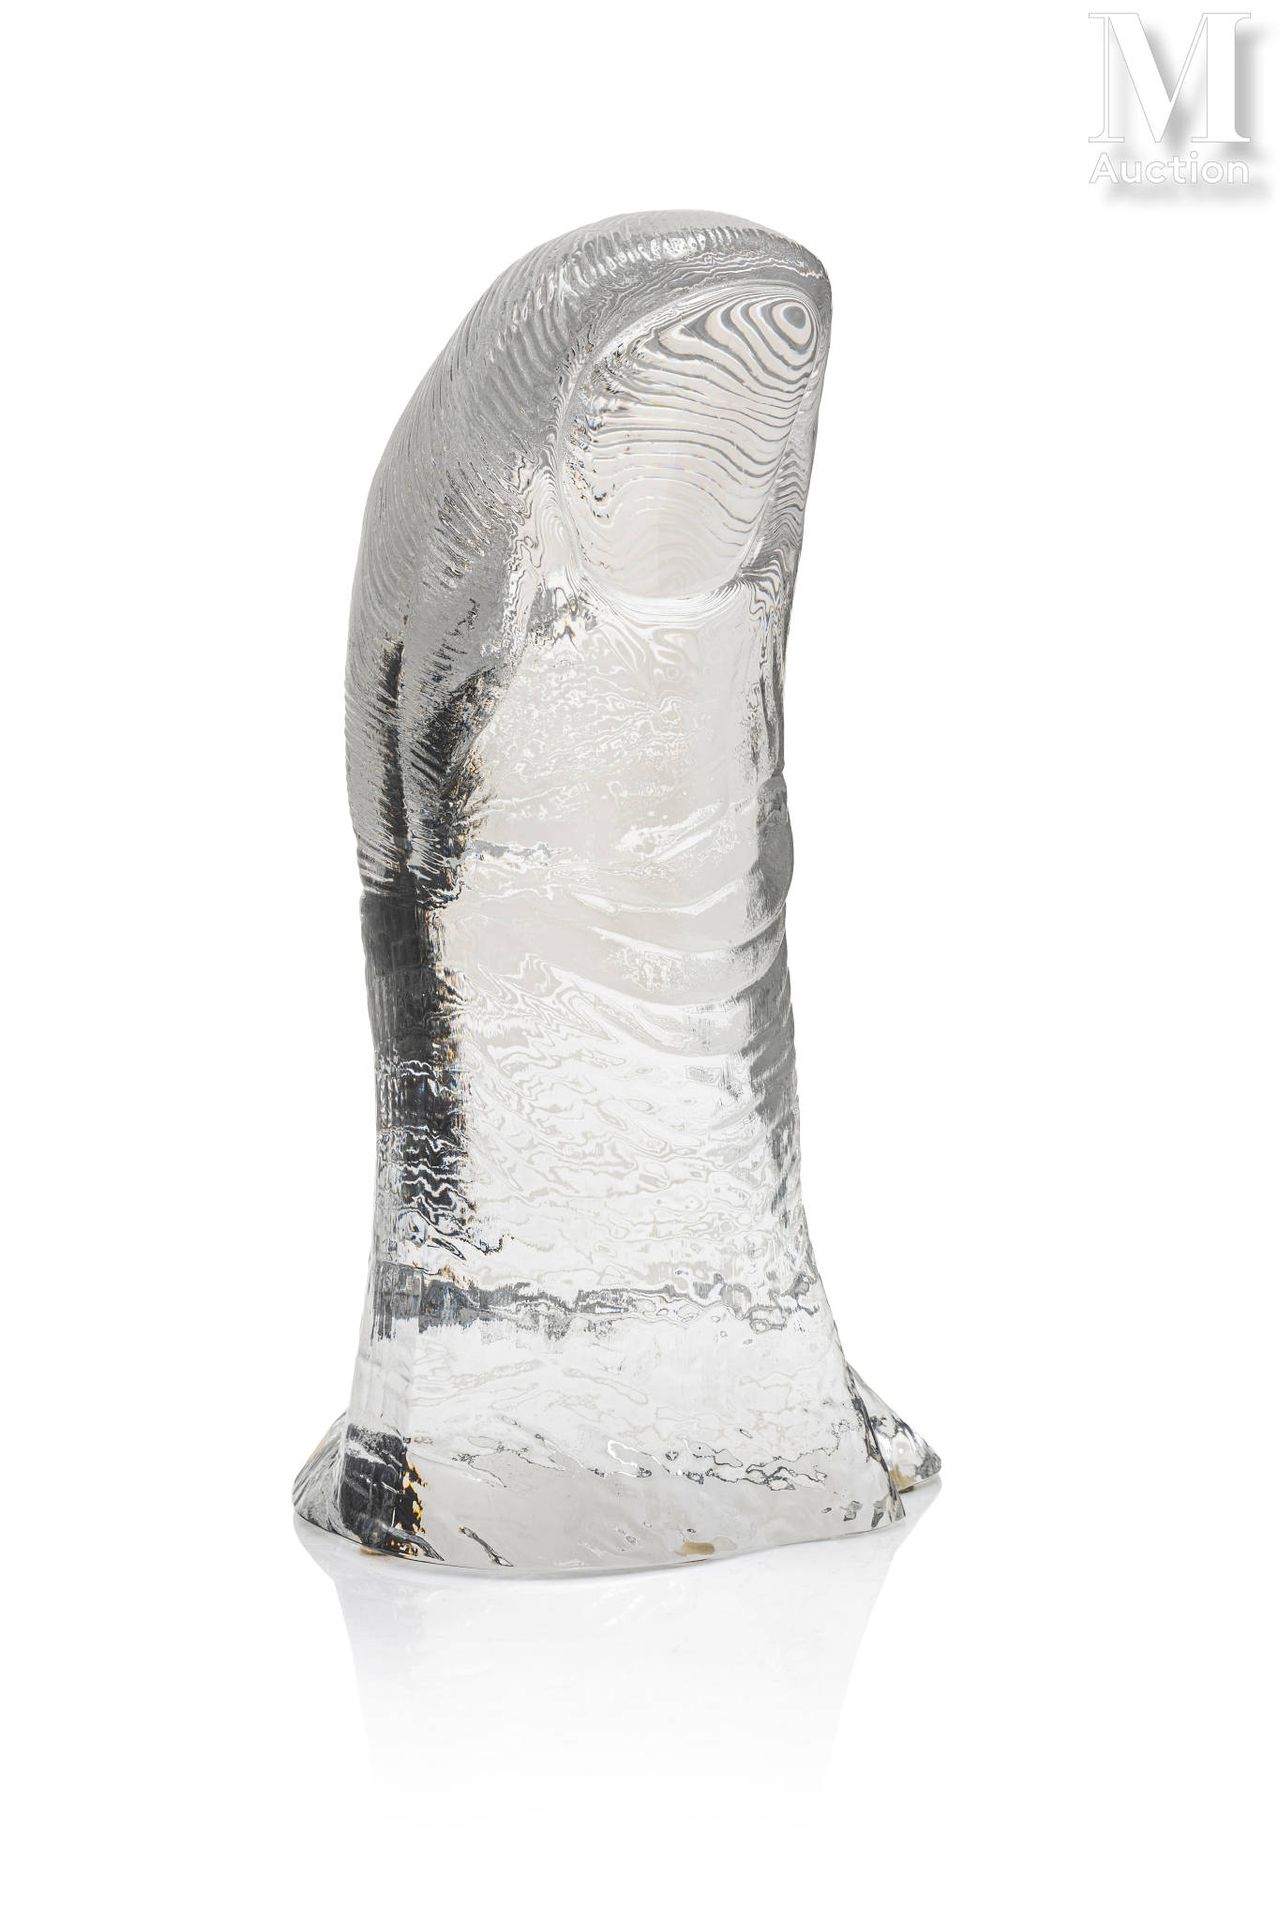 César (1921-1998) 拇指》，1975年

水晶，雕塑上有签名，编号为64/300，底座上刻有Daum France字样

高度：29厘米



&hellip;